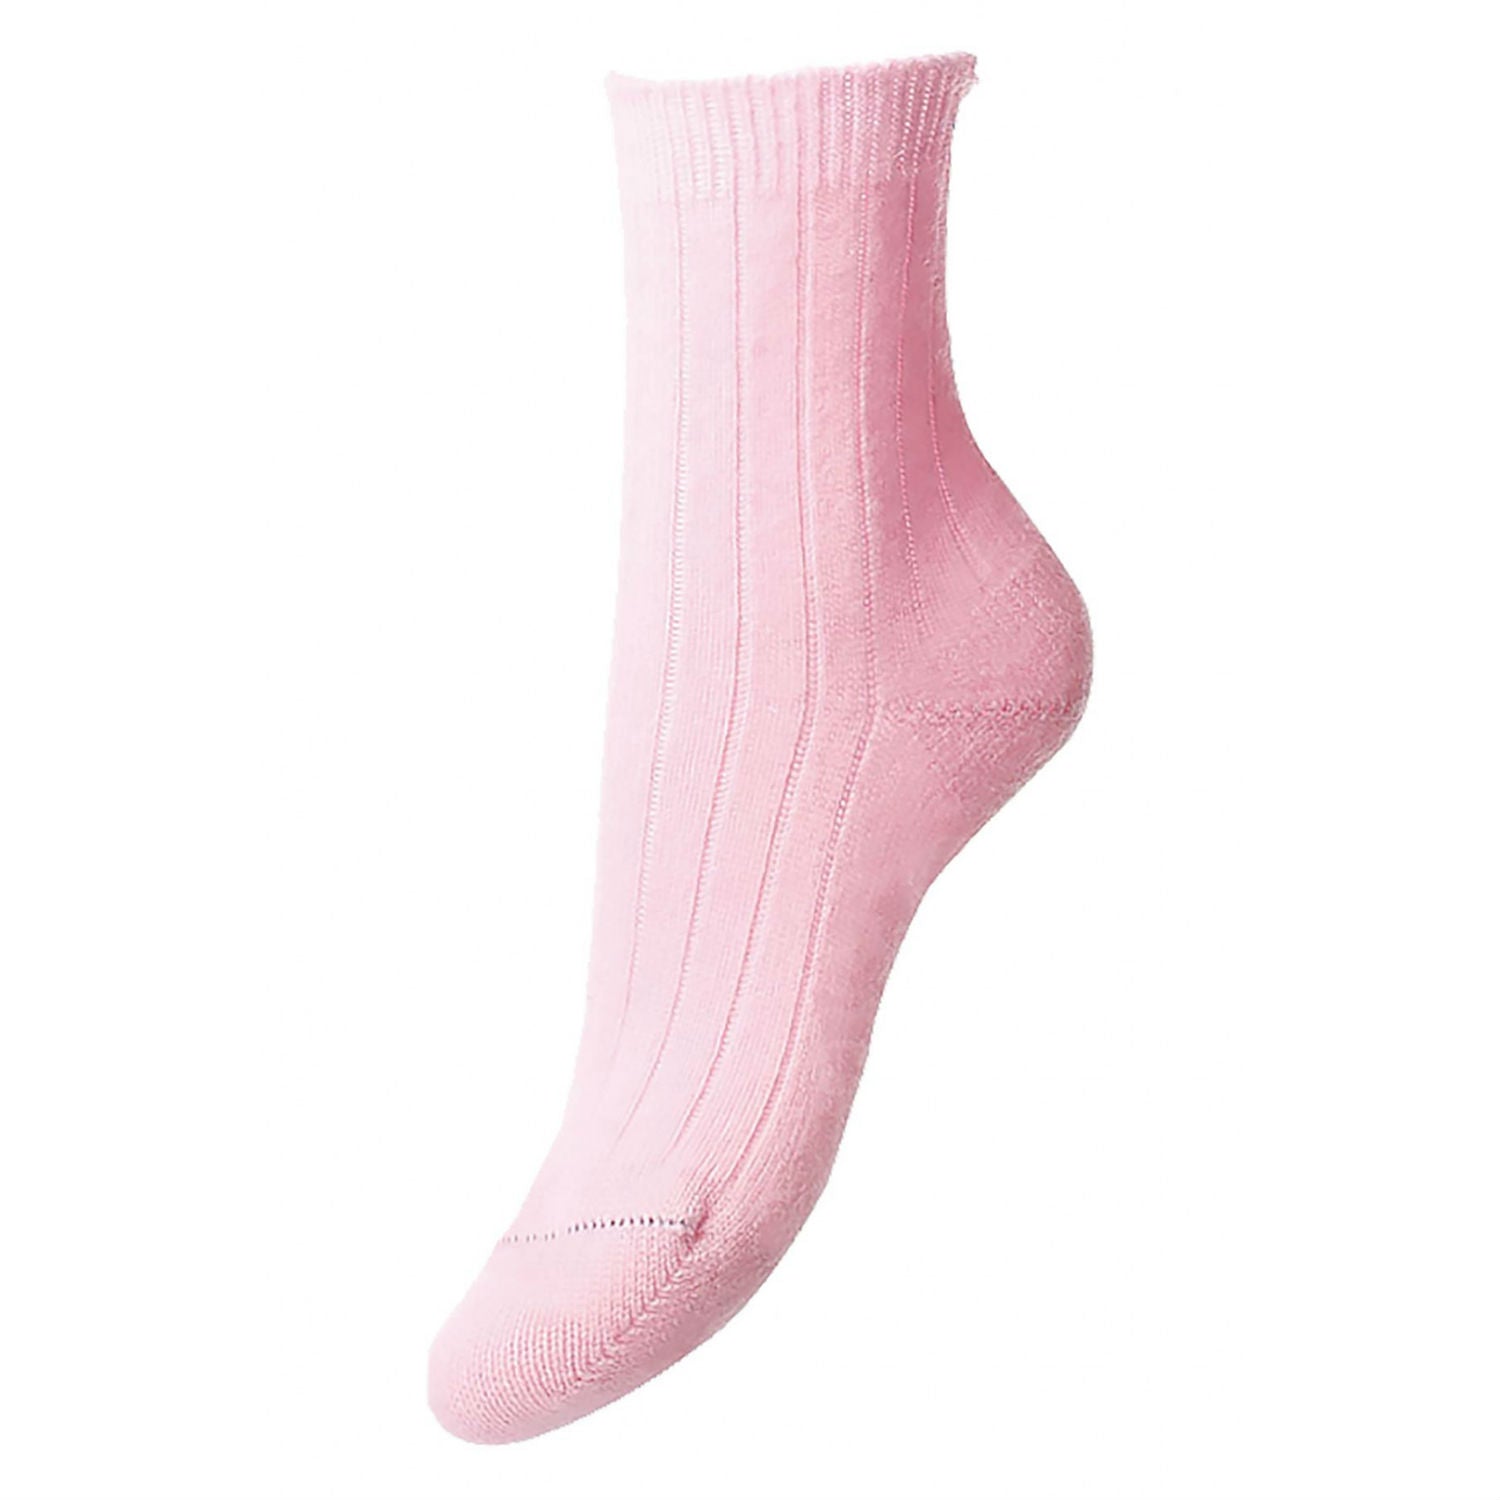 Pantherella women's socks - cashmere - pink